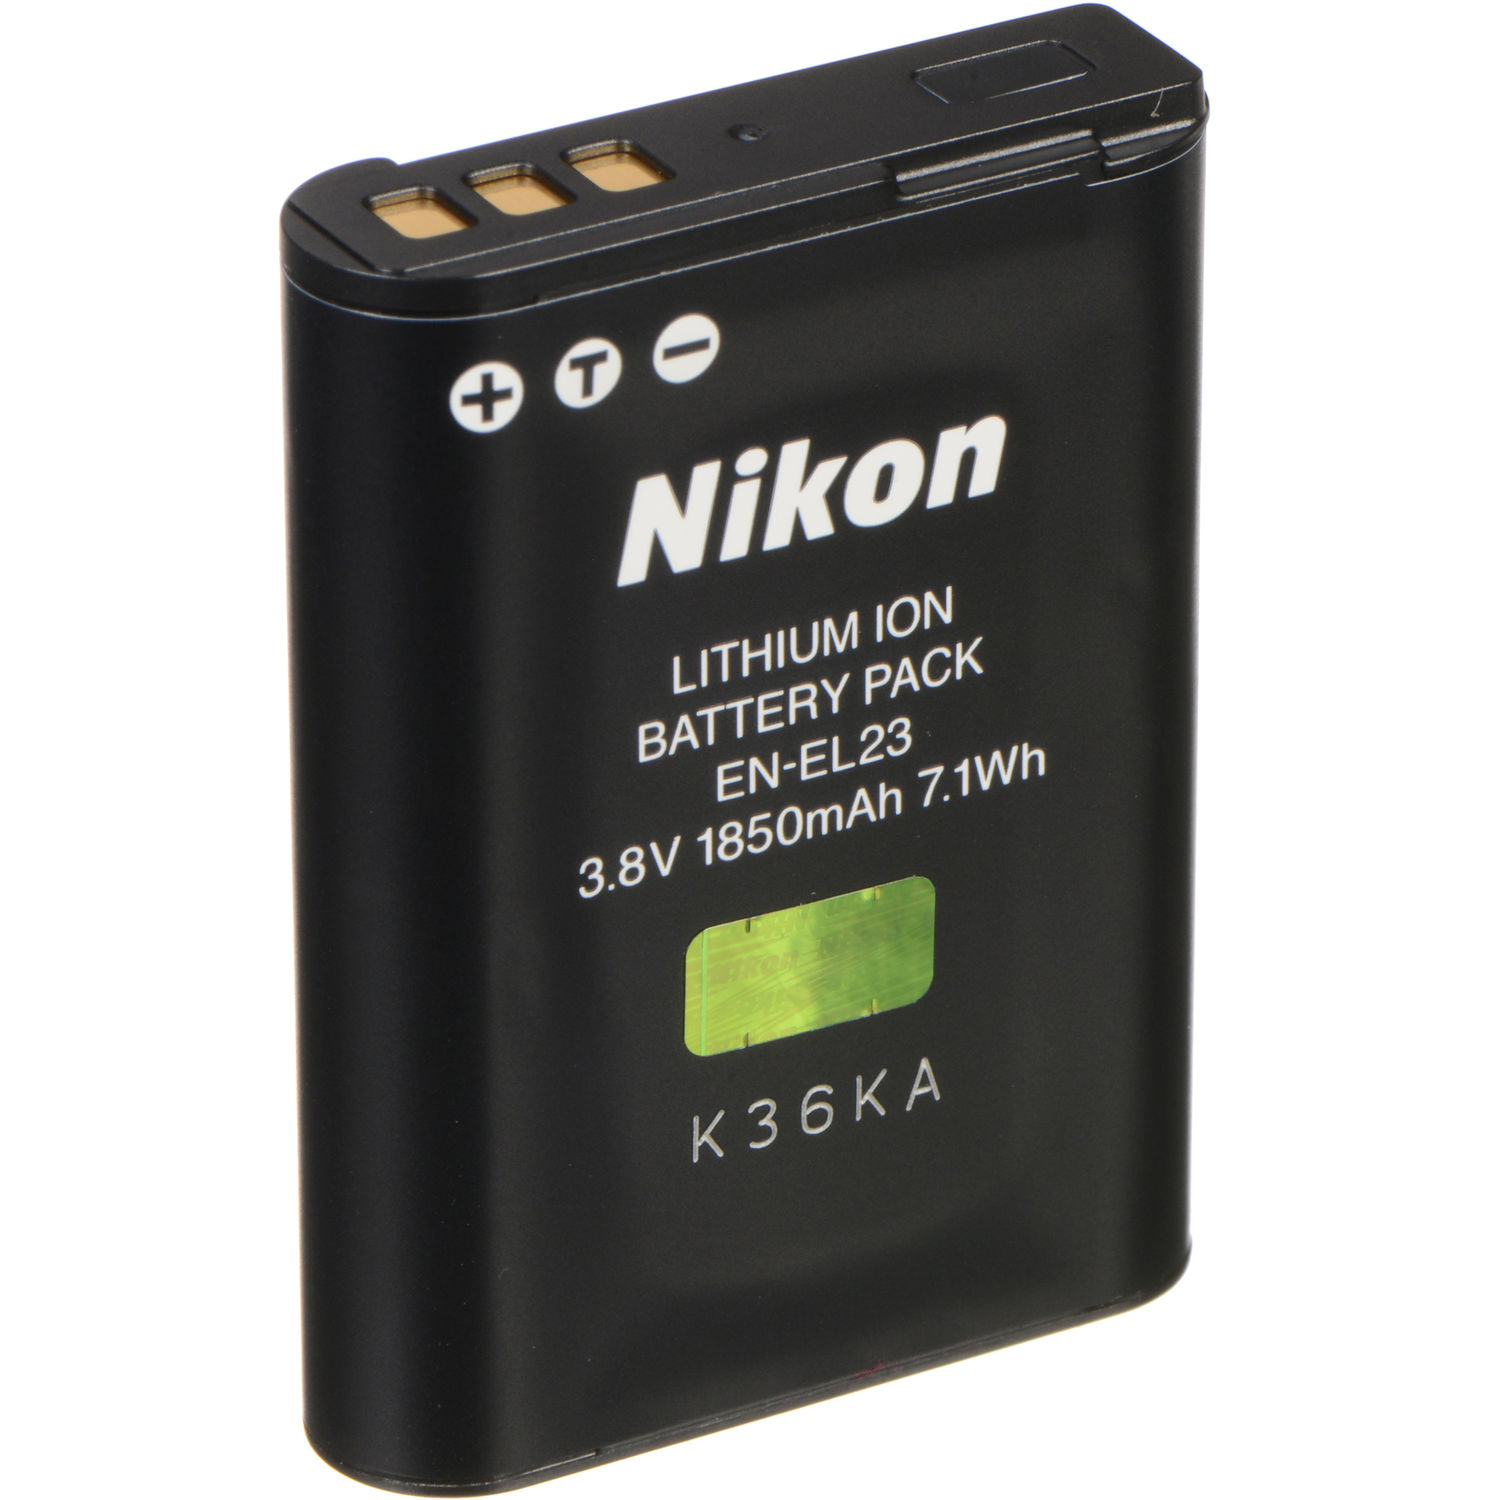 Nikon EN-EL23 Rechargeable Li-Ion  Battery